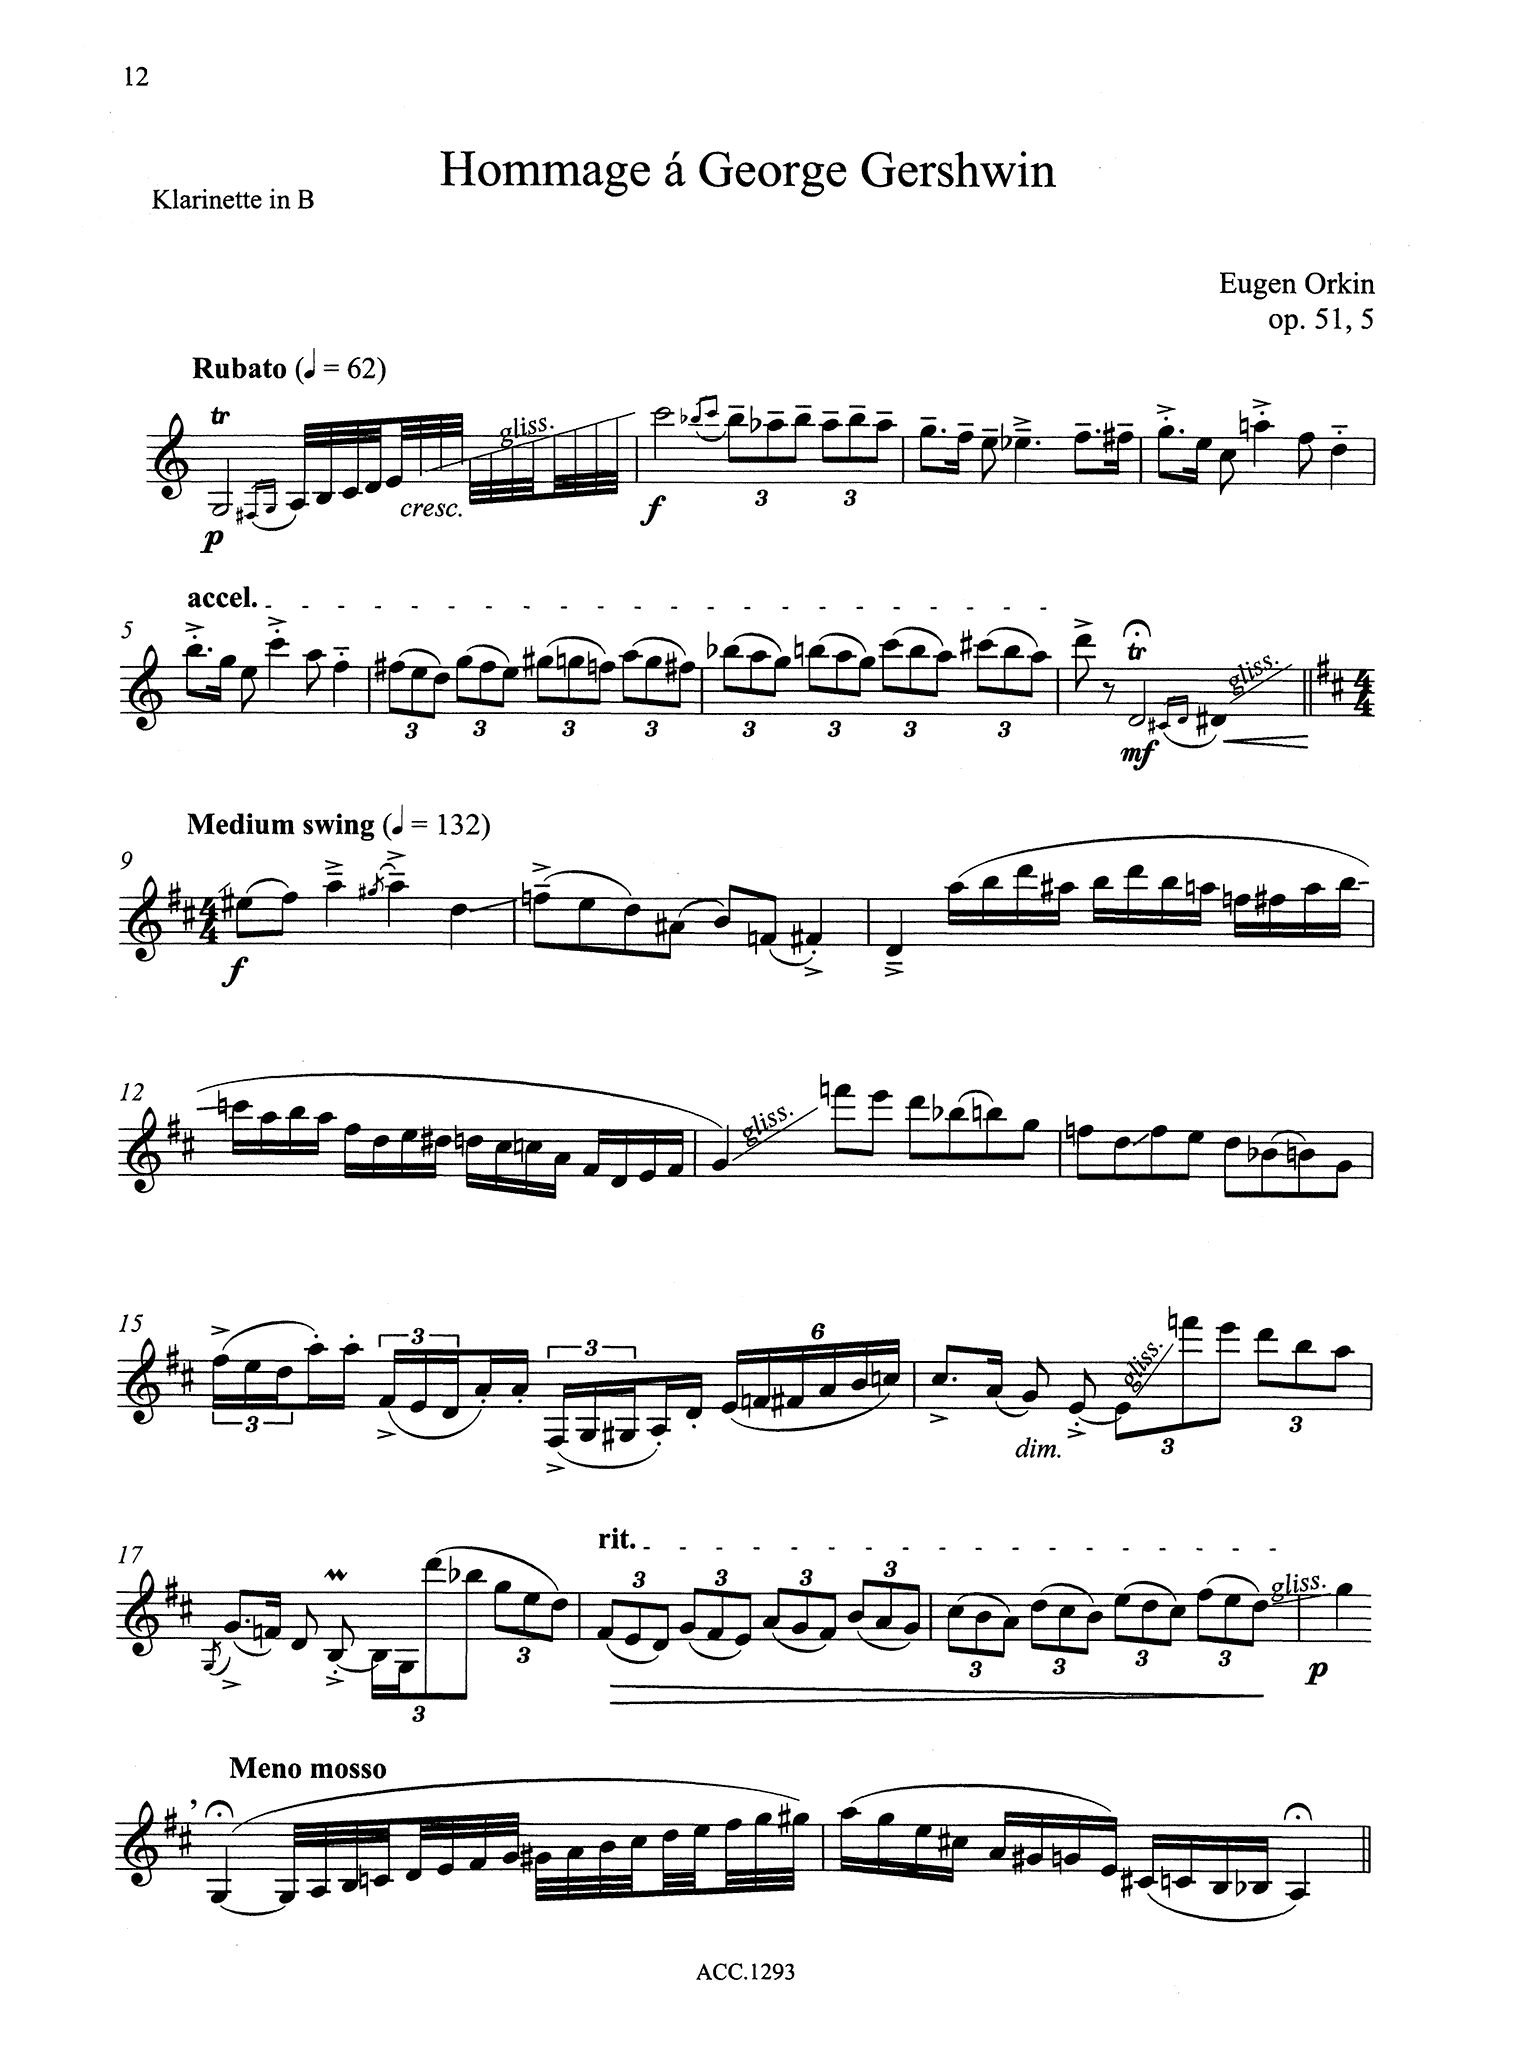 Eugen Orkin Hommage a Gershwin for Clarinet Unaccompanied